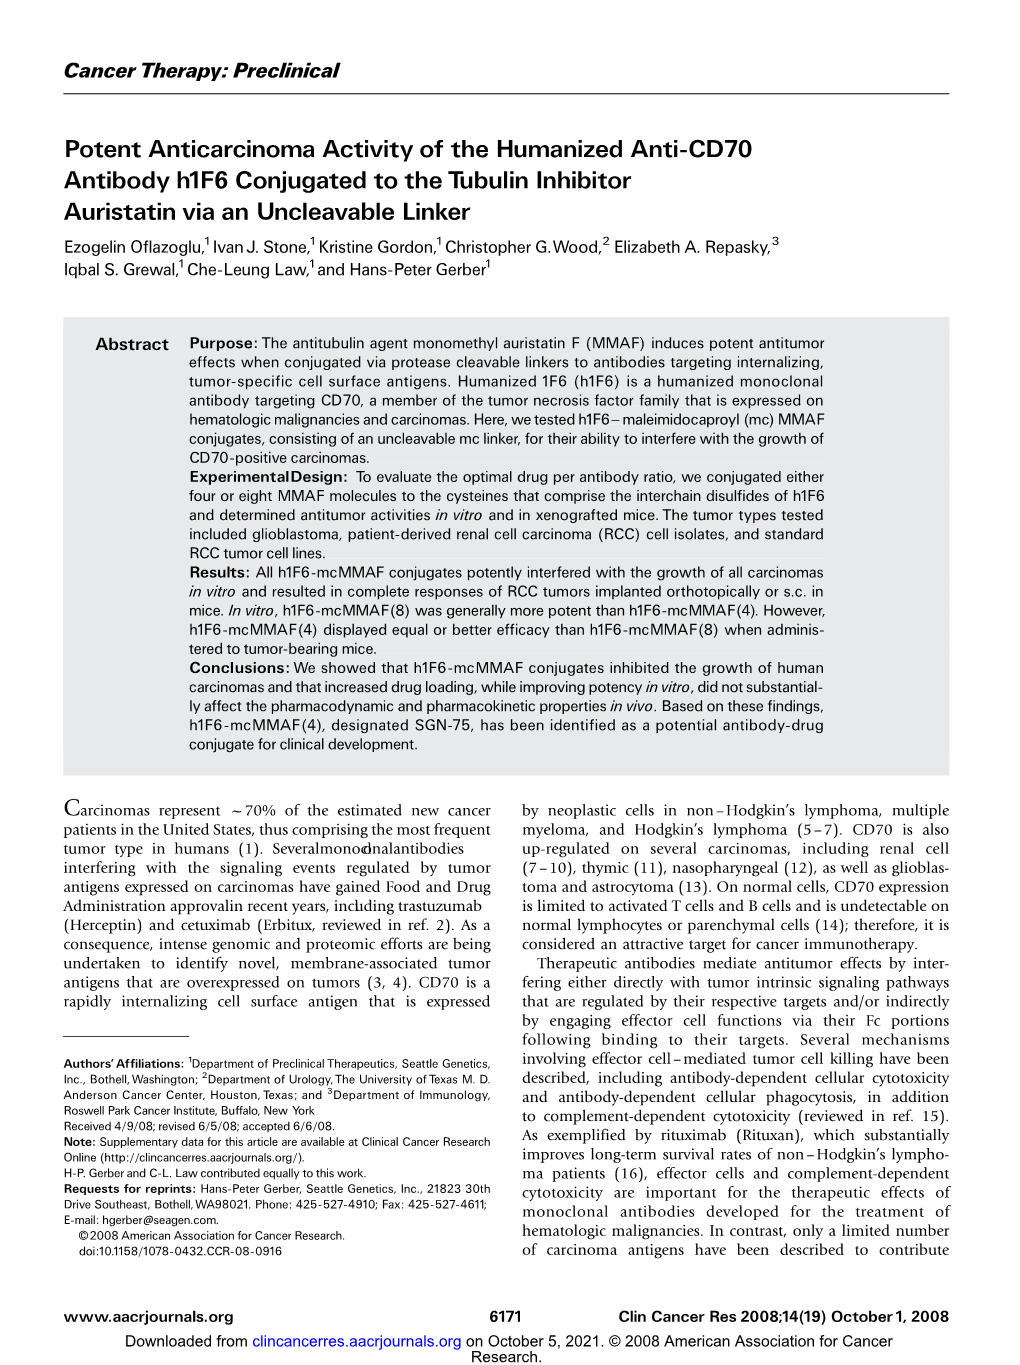 Potent Anticarcinoma Activity of the Humanized Anti-CD70 Antibody